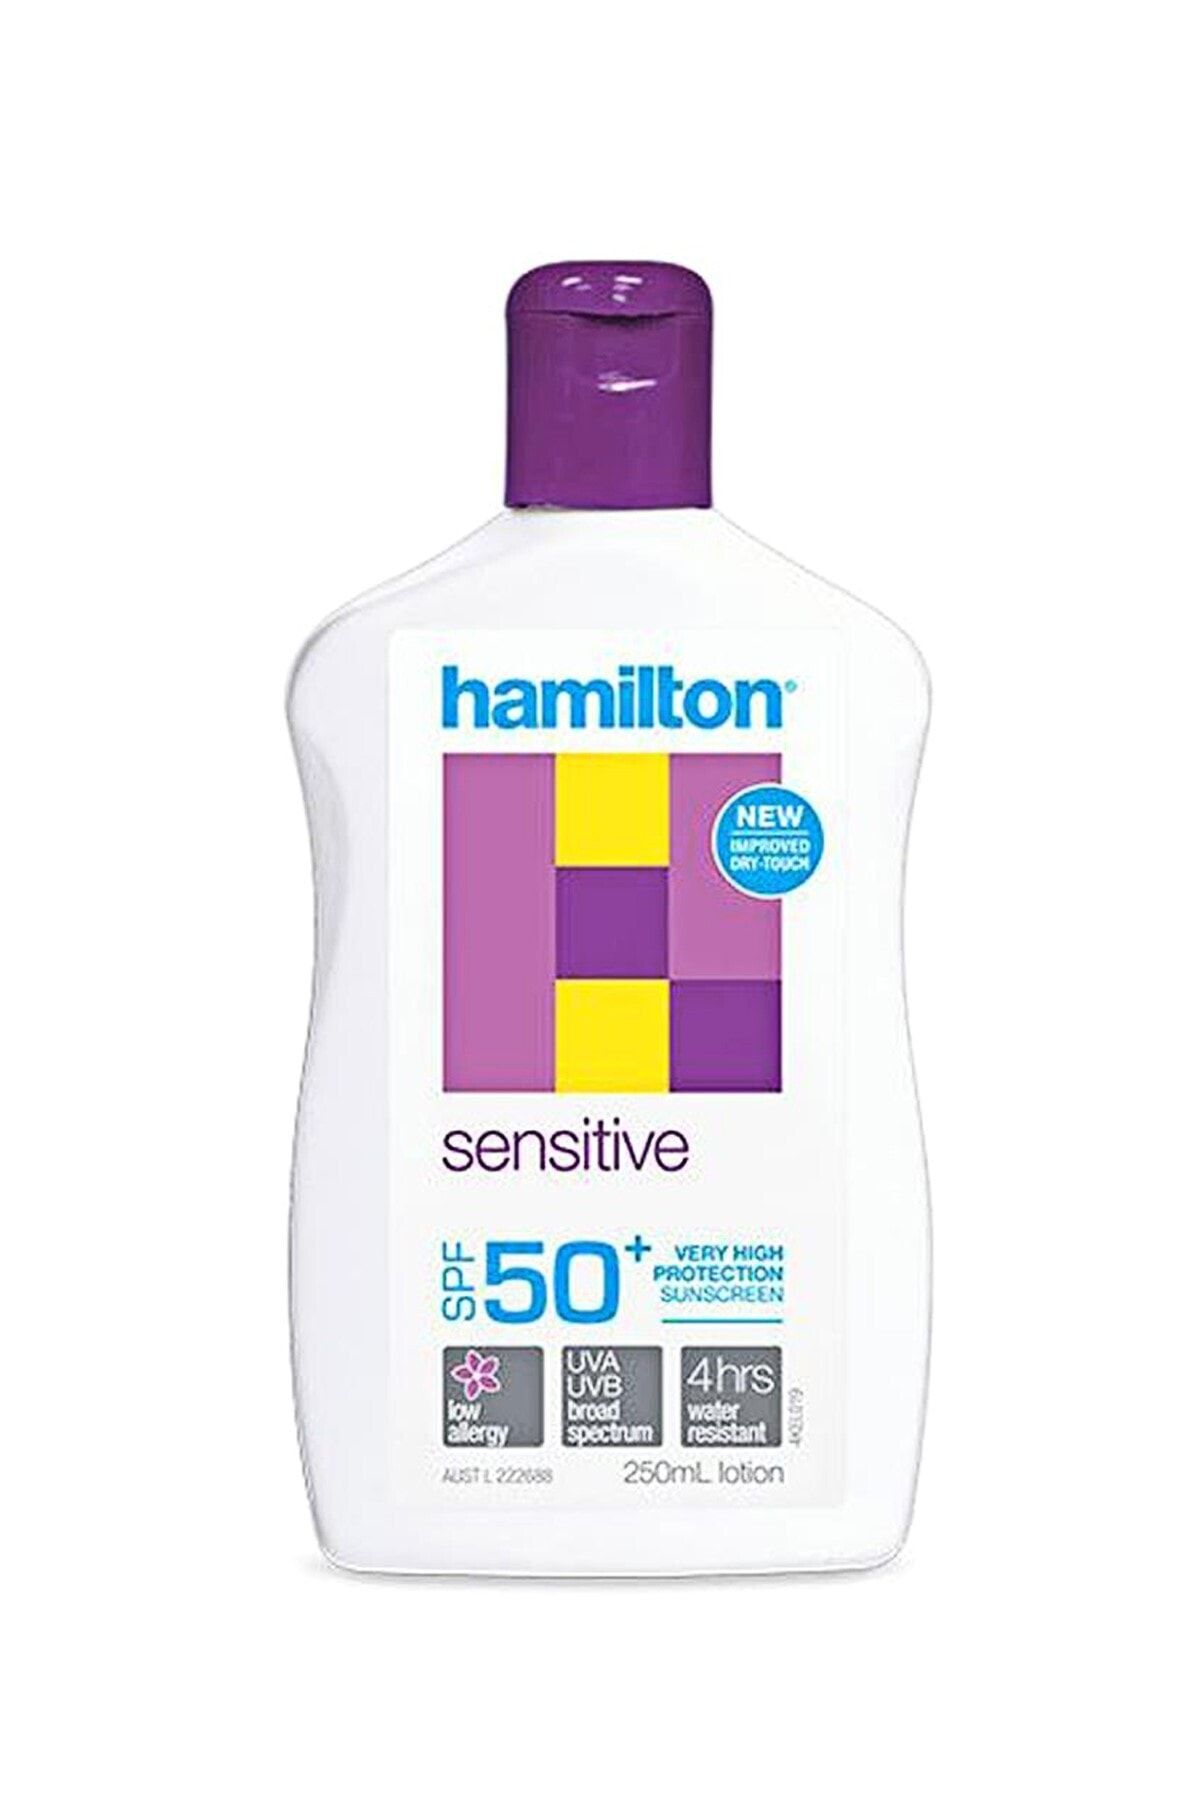 HAMILTON Sensitive Spf50 + Lotion 265 ml